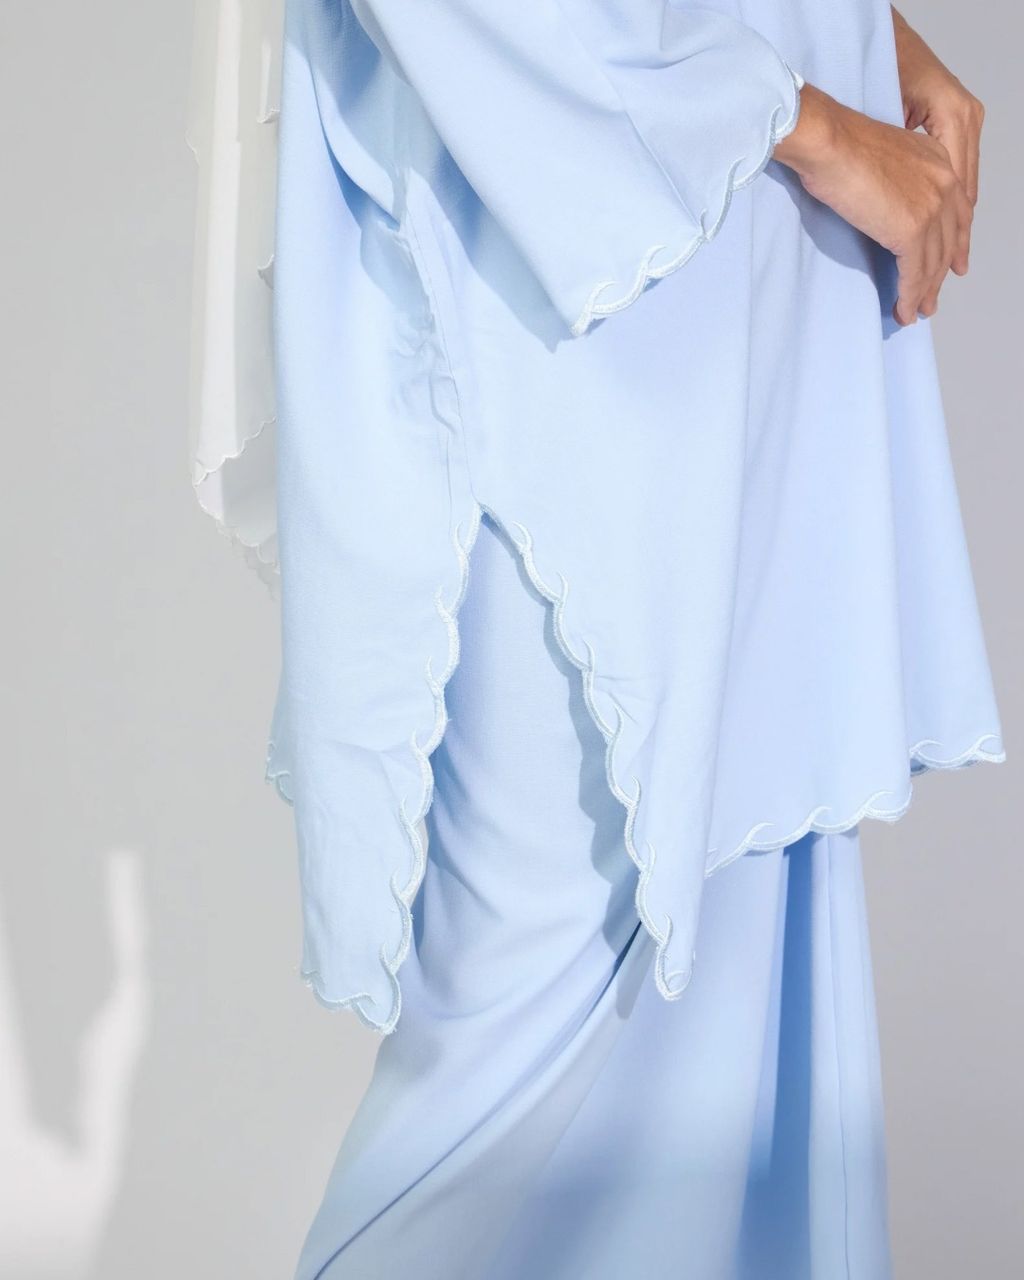 haura-wear-eidra-skirt-set-sulam-embroidery-pario-klasik-tradisional-mini kebaya-fabrik eyelet-raya-muslimah-long-sleeve-baju-skirt-kain-perempuan-baju-sepasang (30)